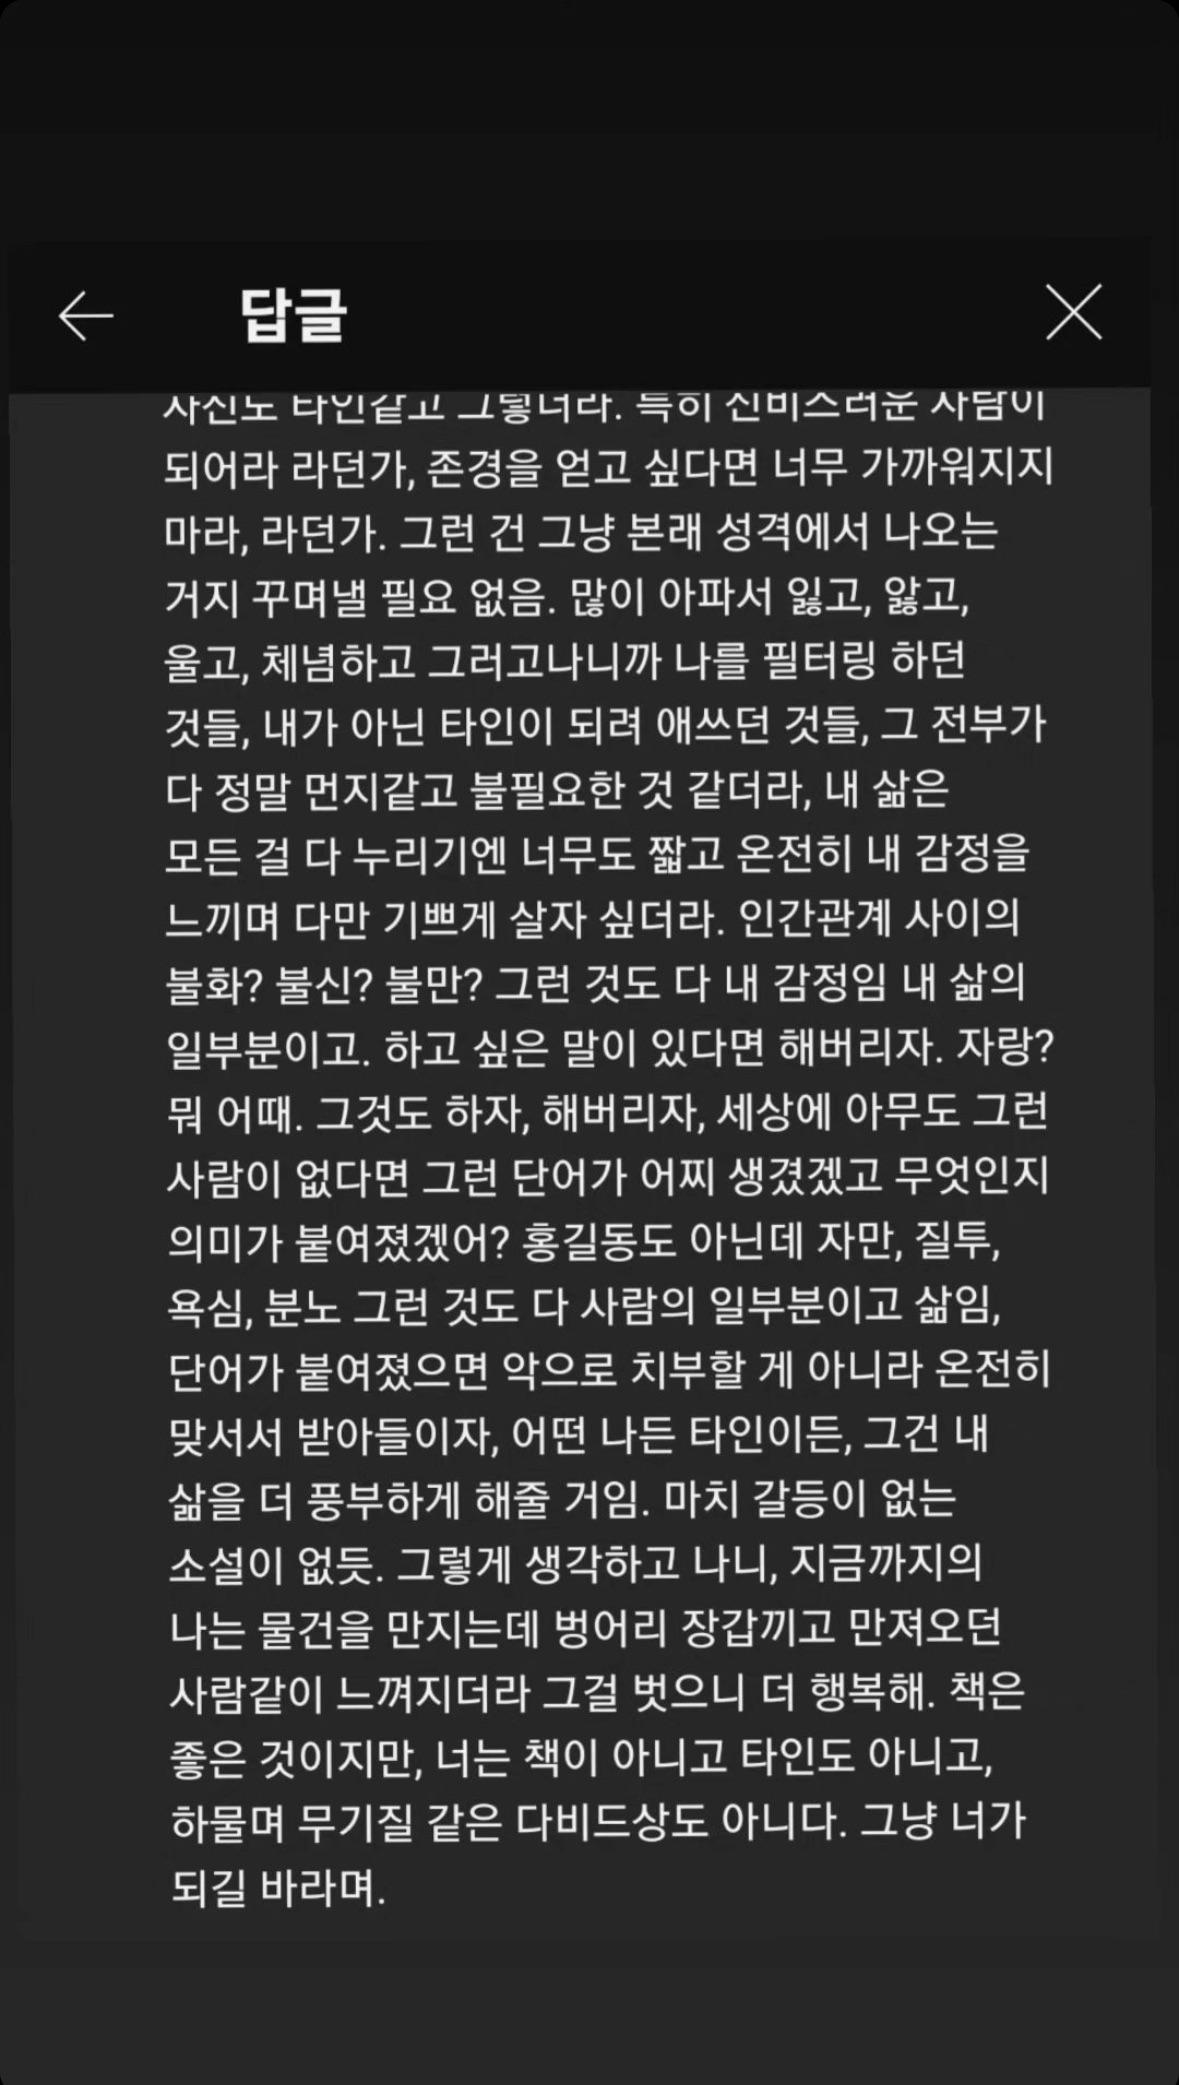 Namjoon IG Story (2) 051123